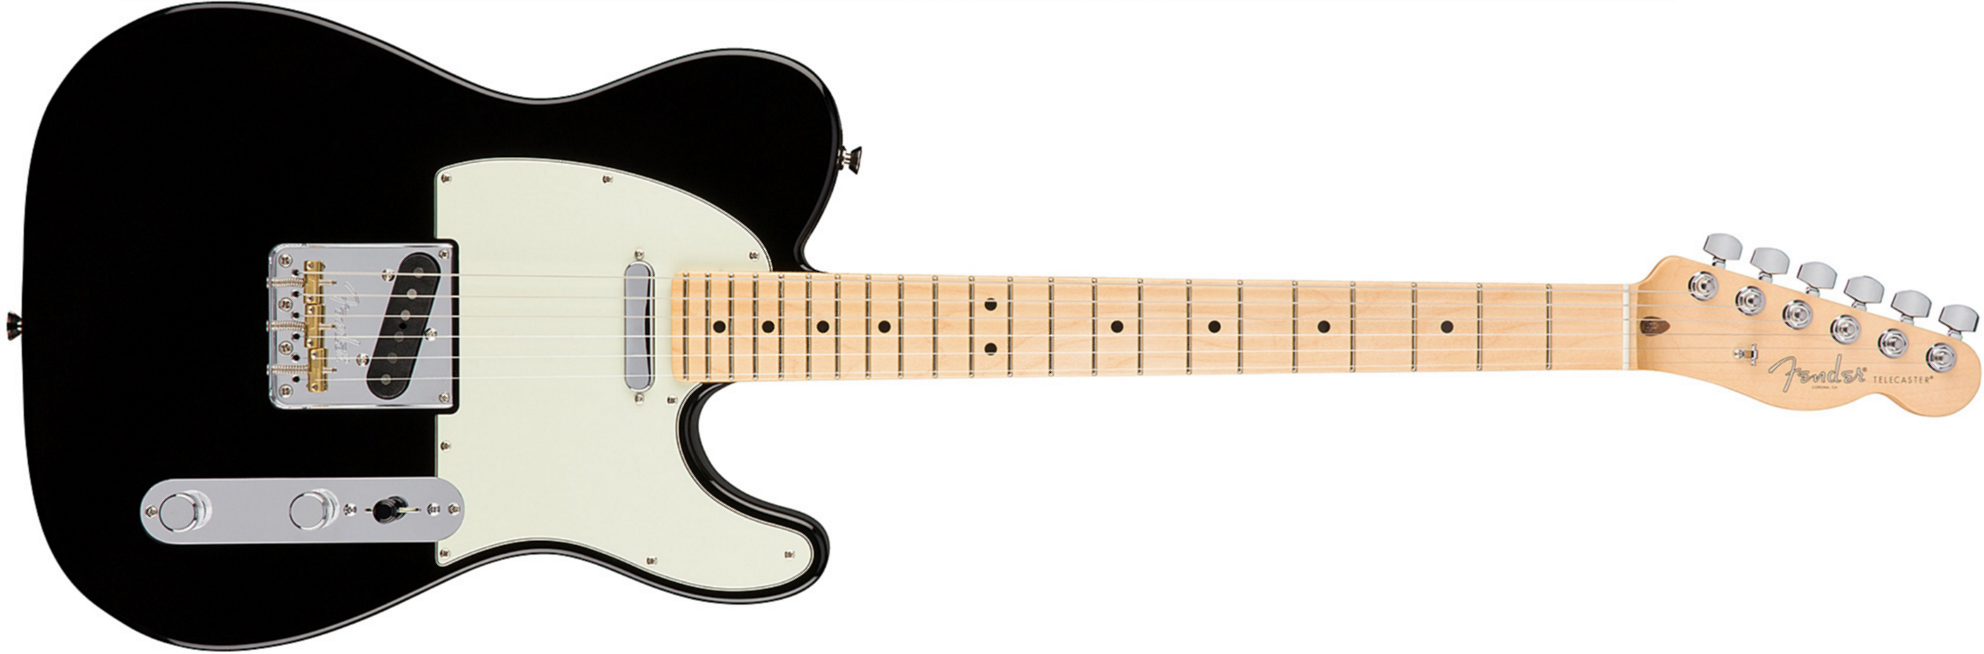 Fender Tele American Professional 2s Usa Mn - Black - Tel shape electric guitar - Main picture